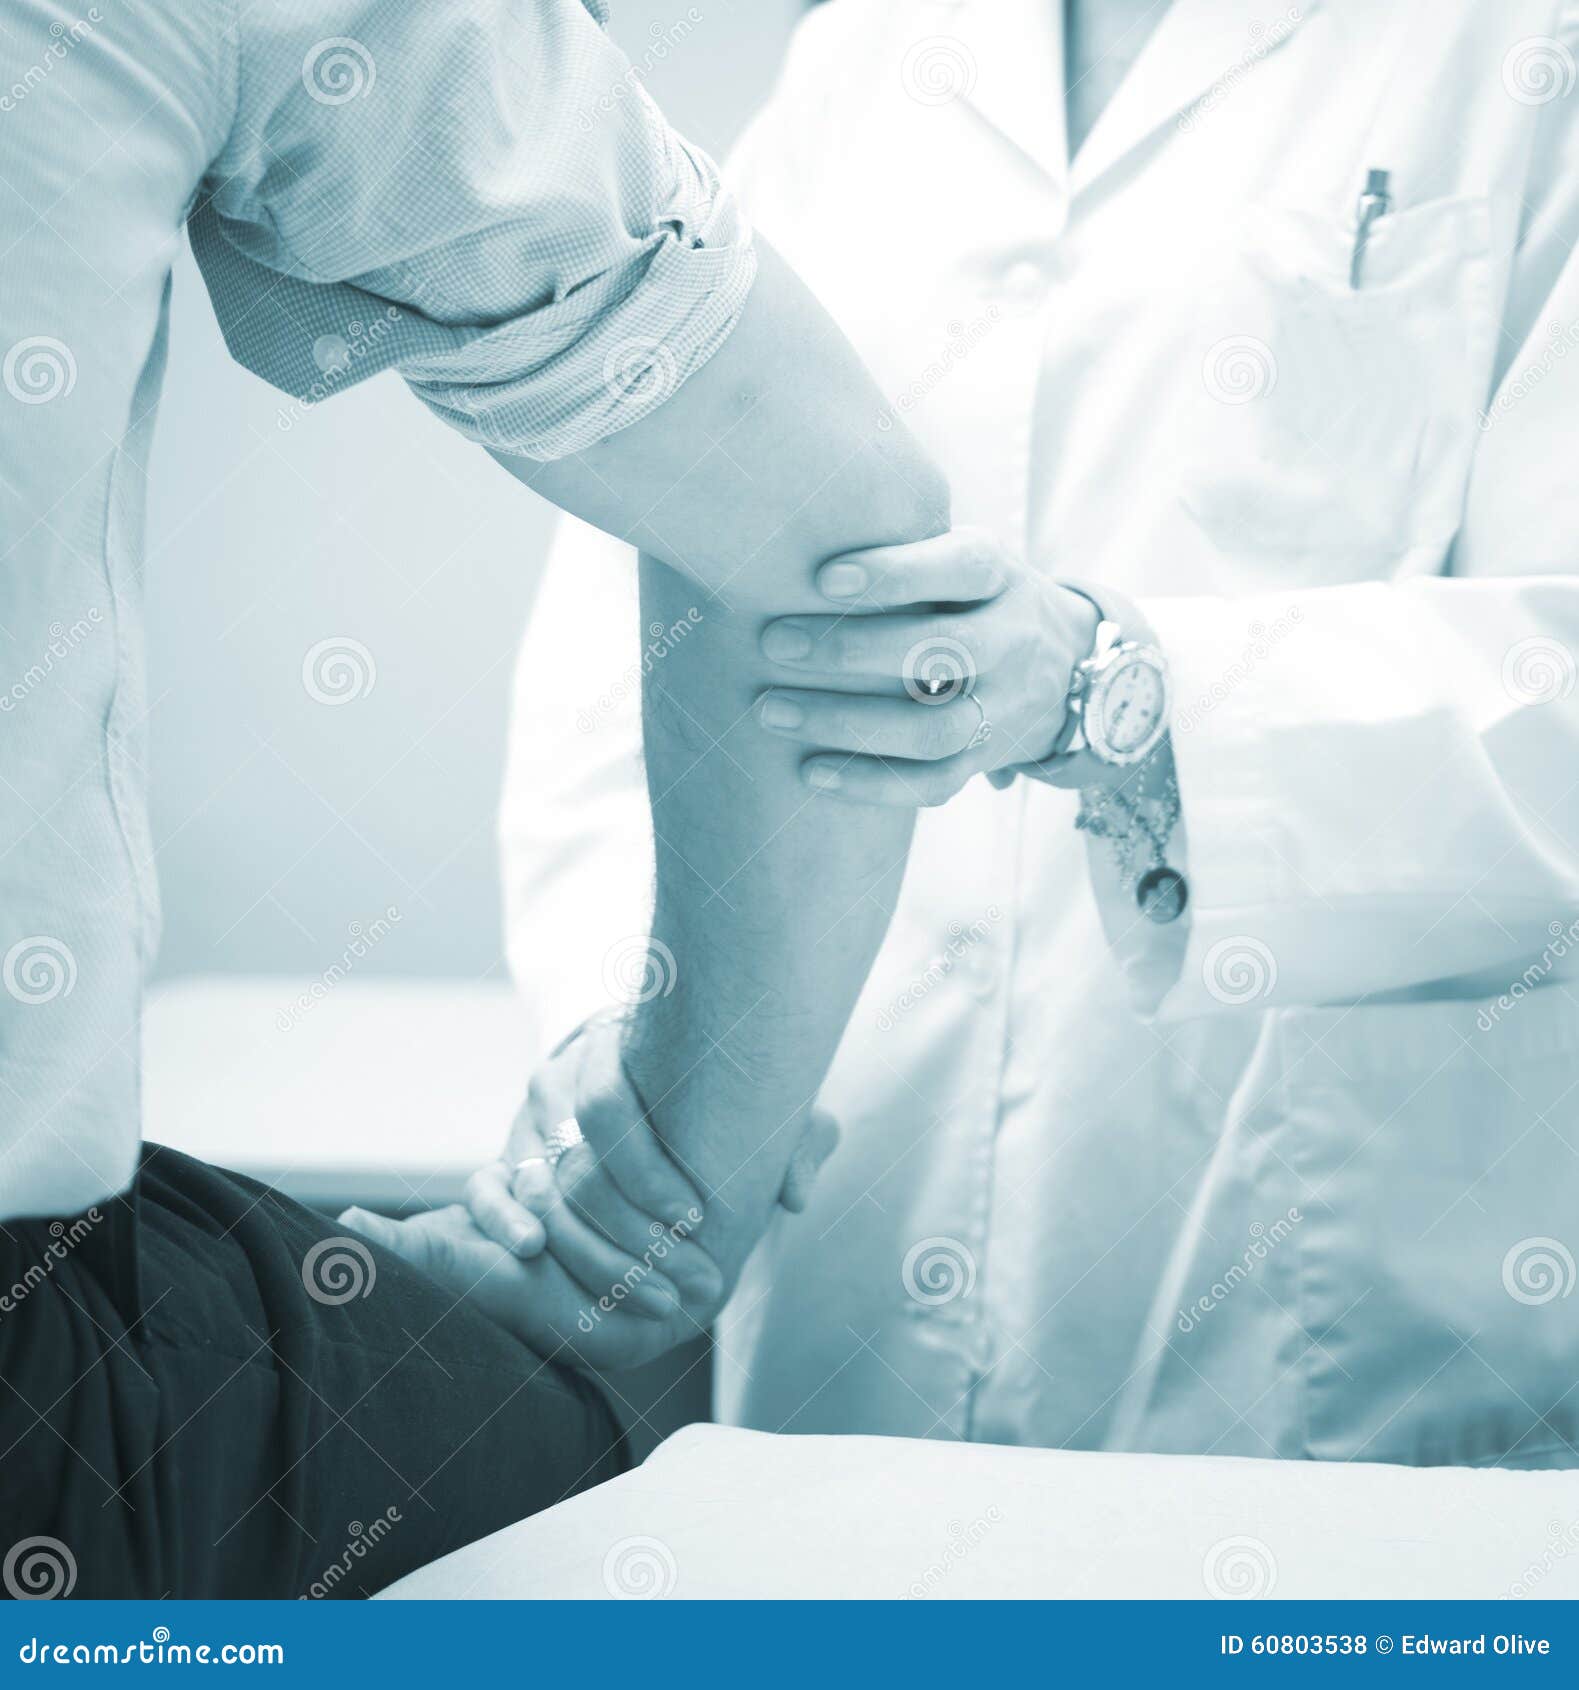 traumatologist orthopedic surgeon doctor examining patient